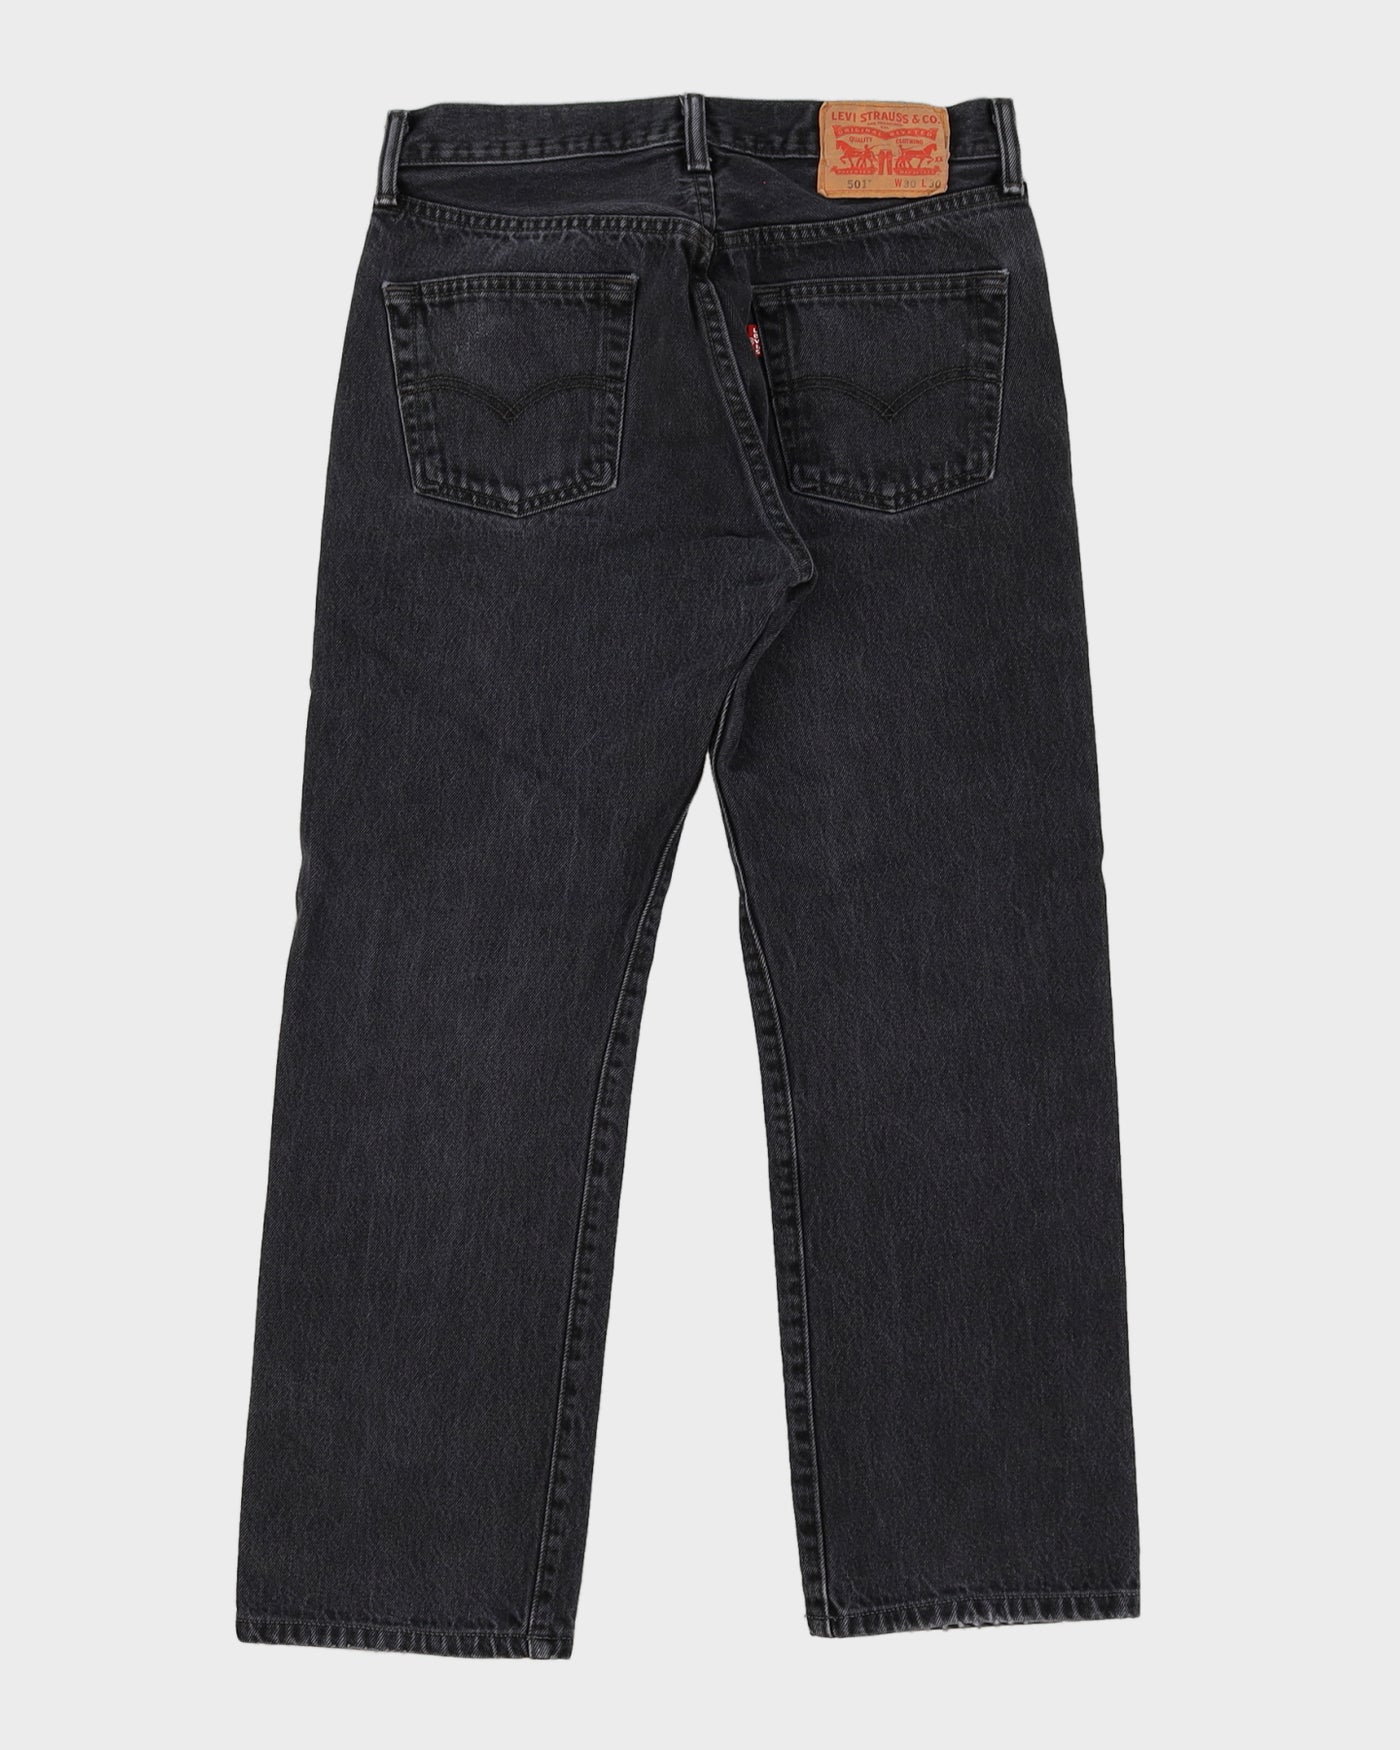 Levi's 501 Black Jeans - W30 L26